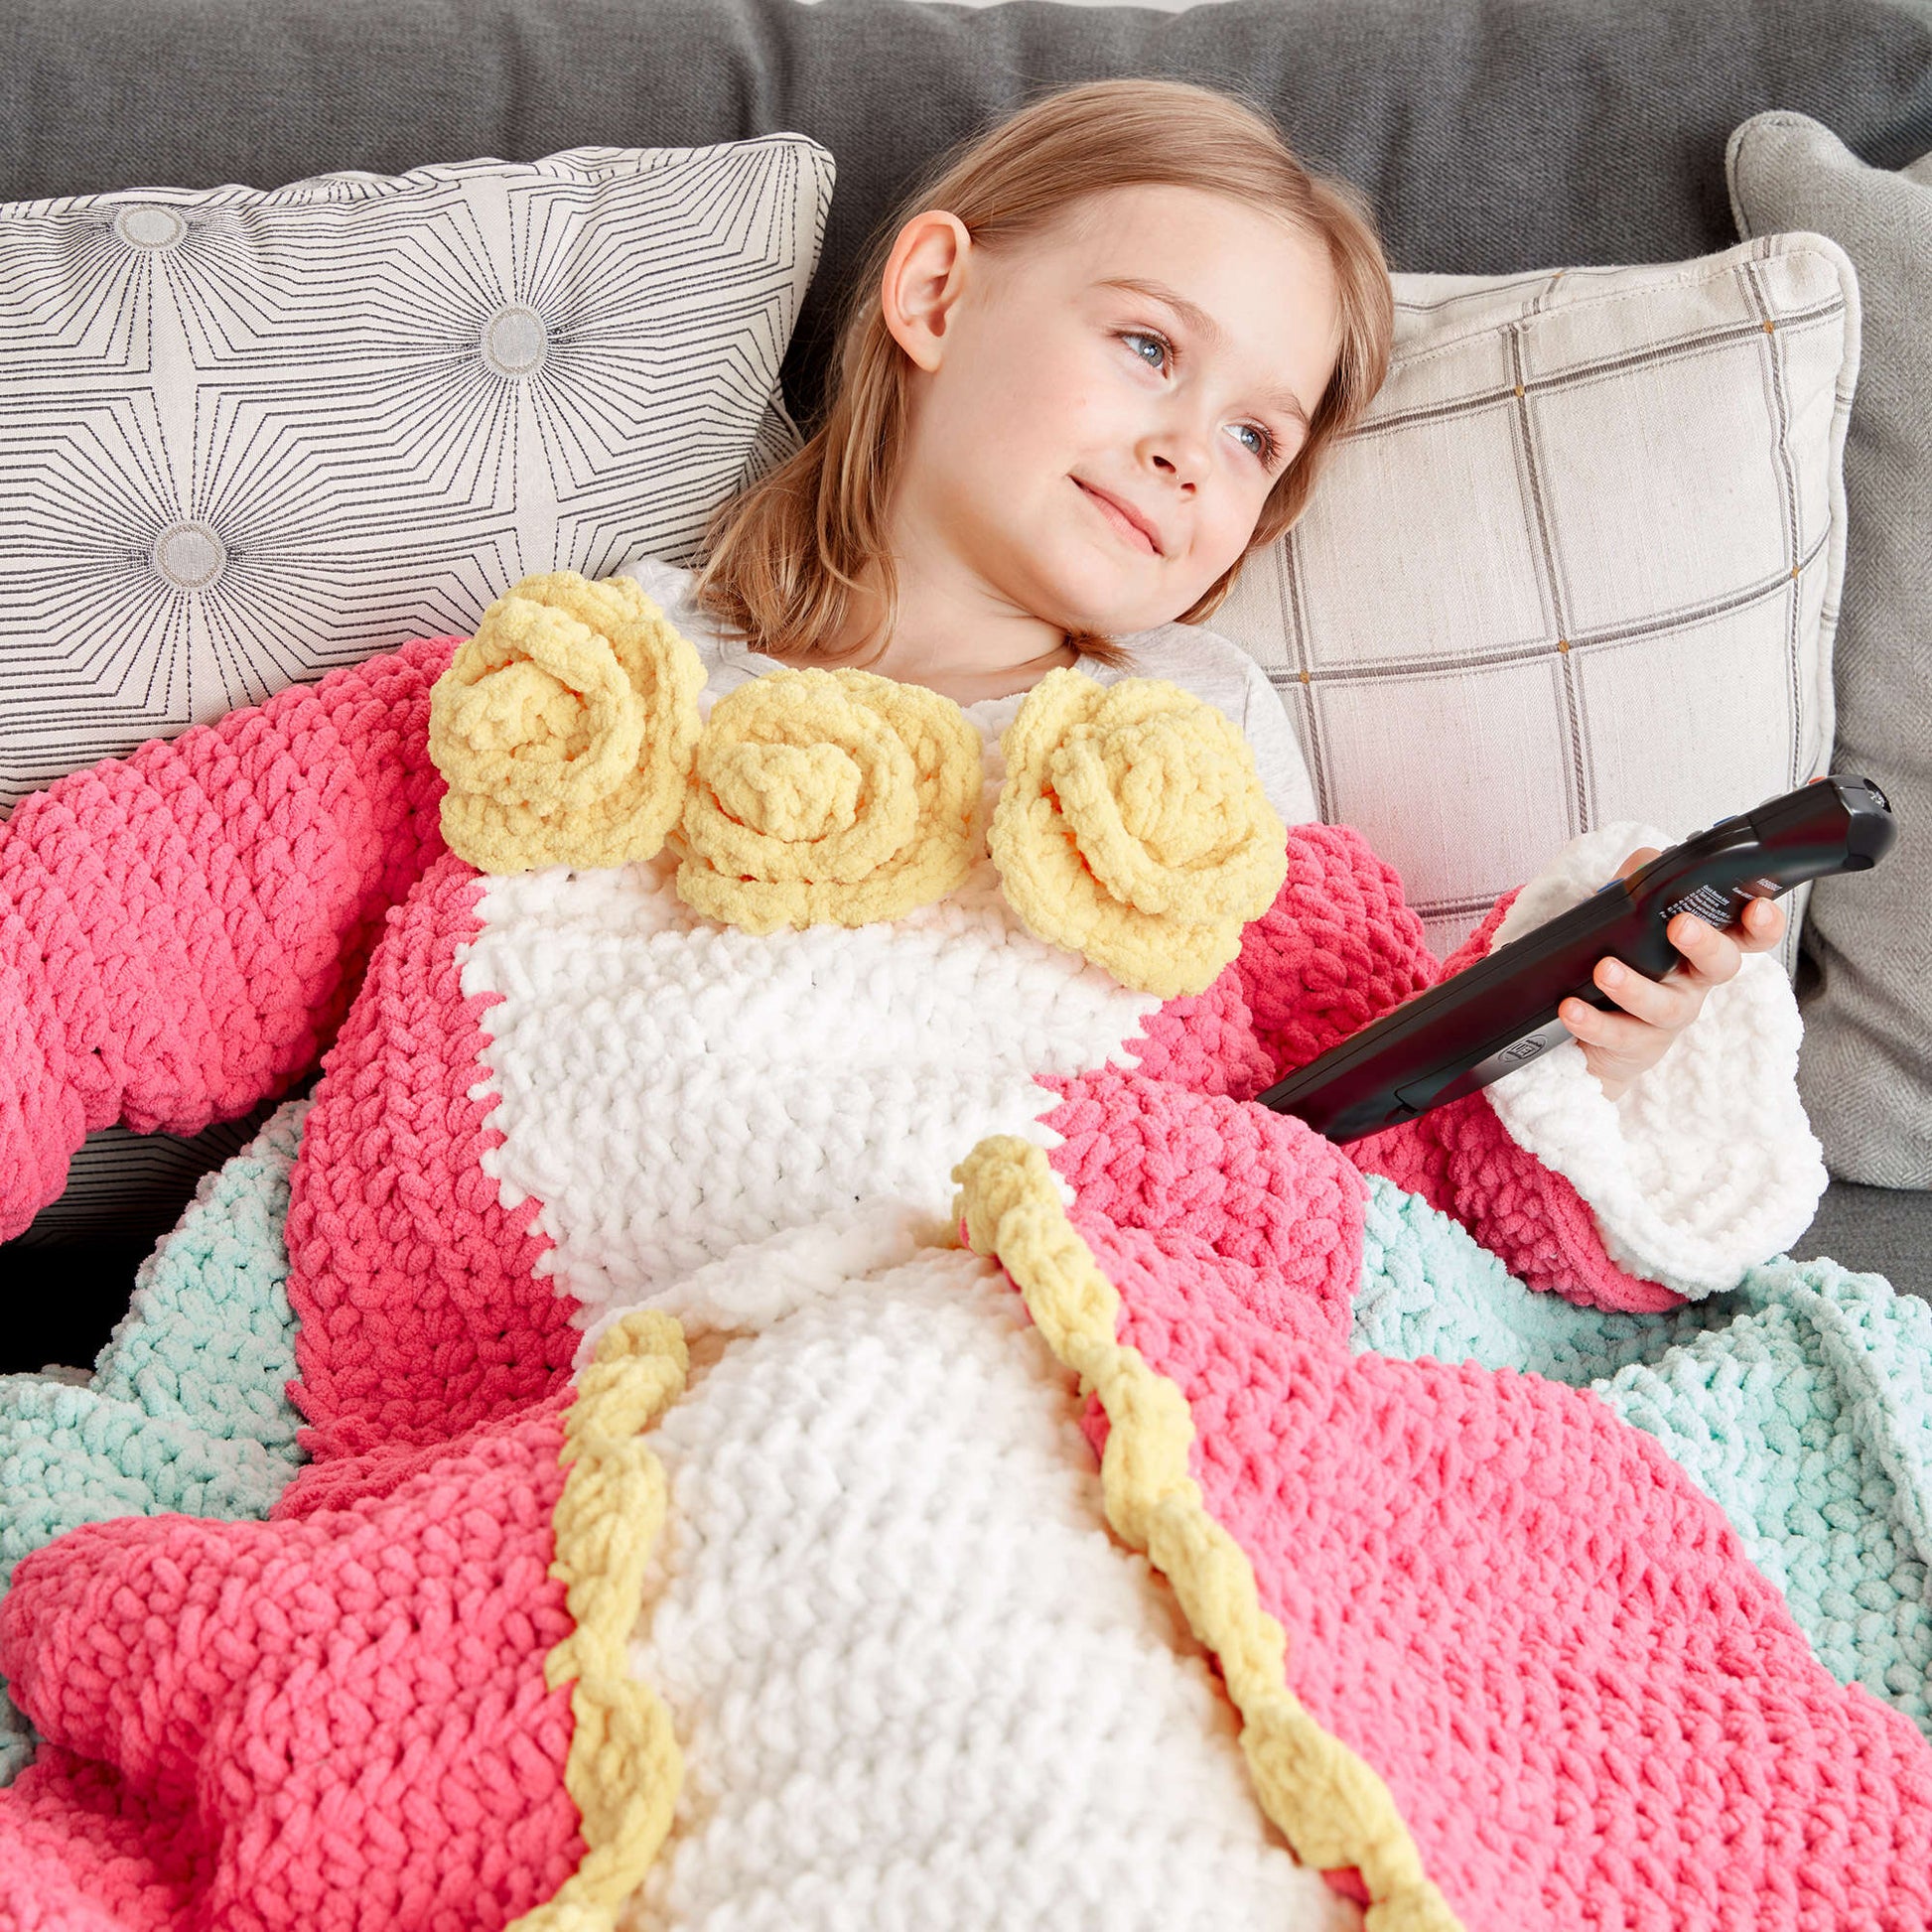 Bernat Dreamy Princess Crochet Snuggle Sack Crochet Blanket made in Bernat Baby Blanket yarn